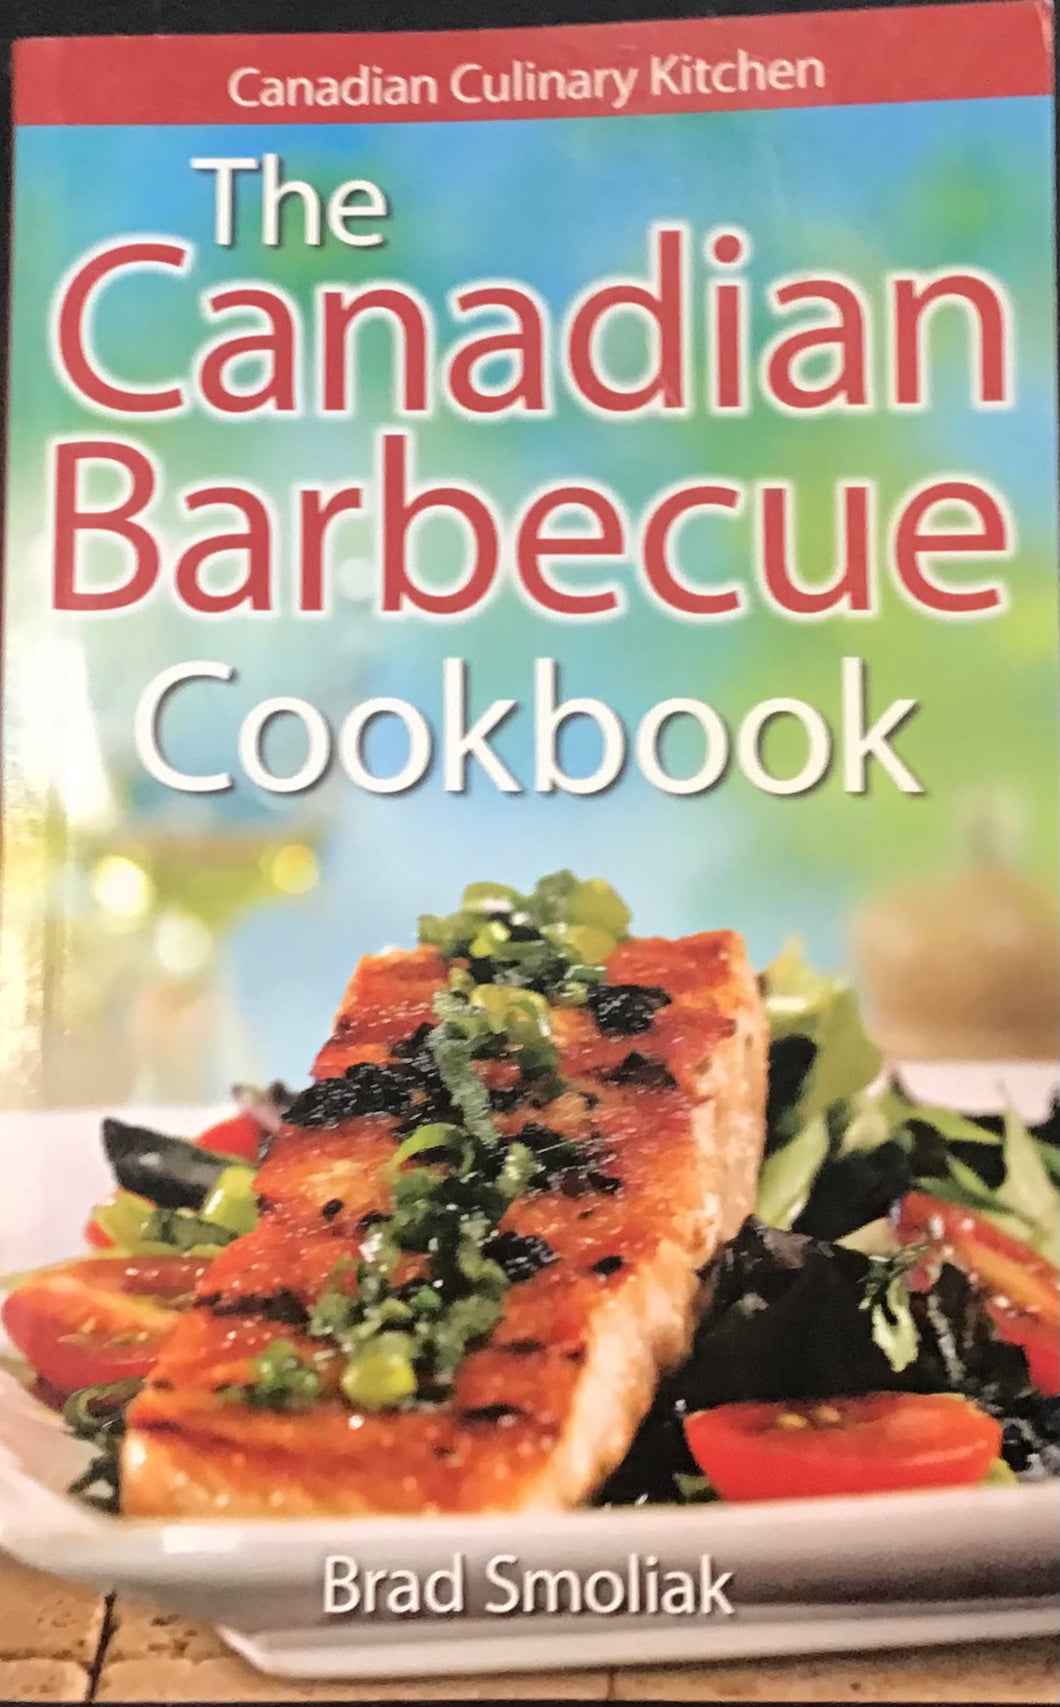 The Canadian Barbecue Cookbook, Brad Smoliak